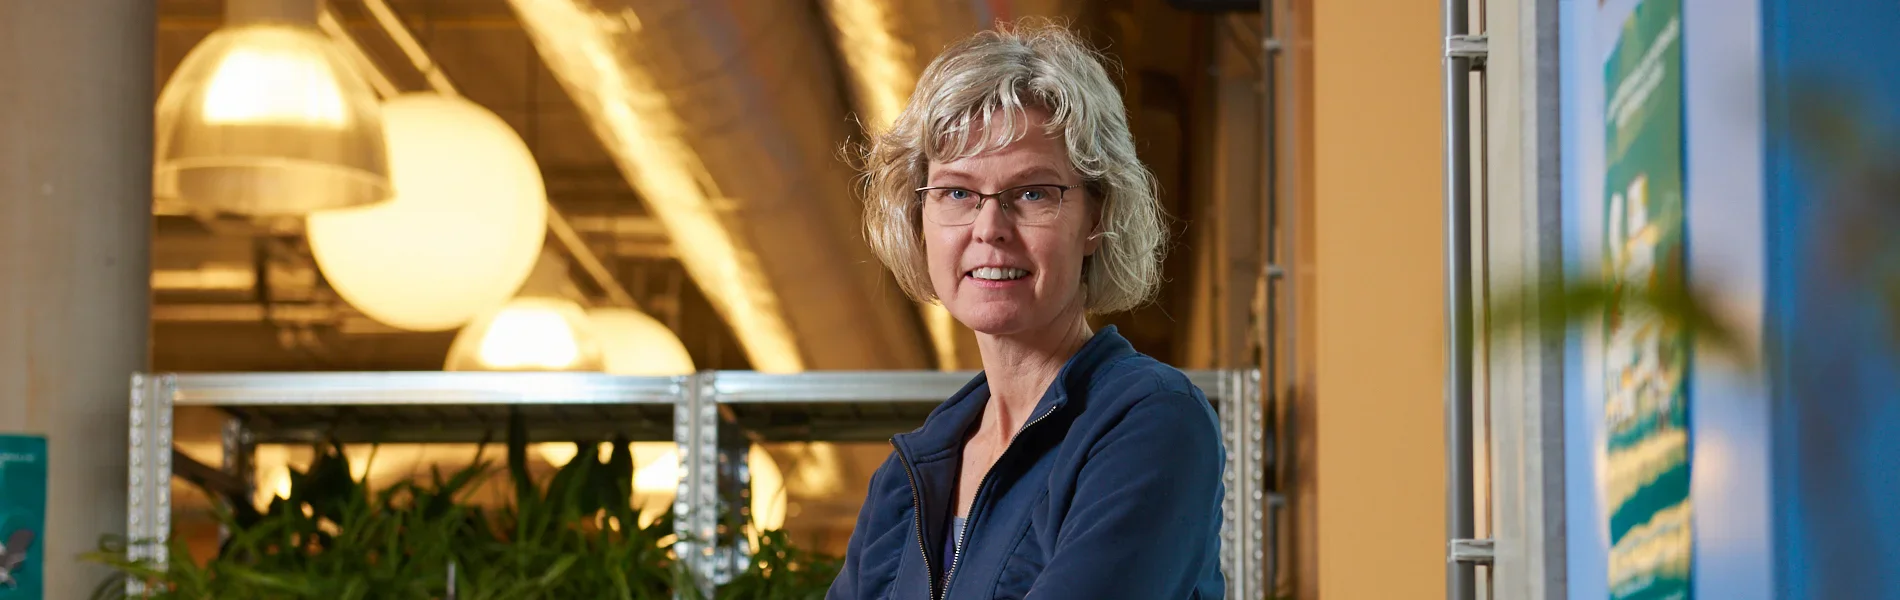 Brigitta Methorst-Zijlstra researcher at Aeres University of Applied Sciences Almere